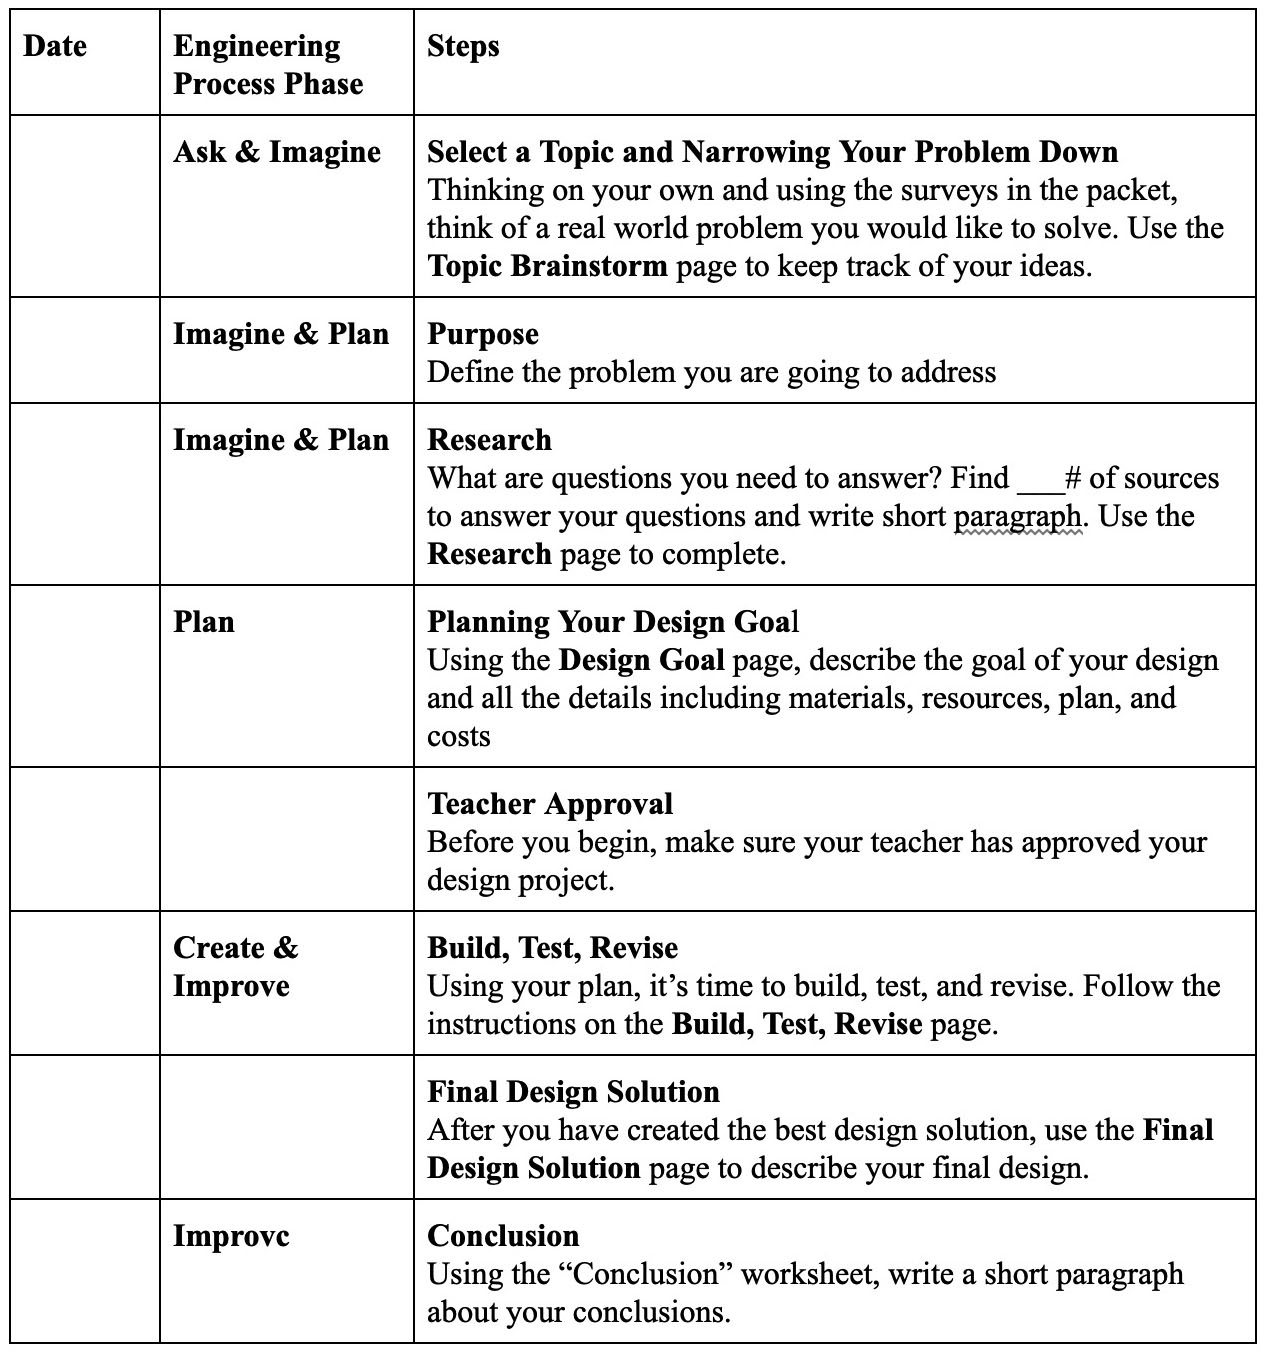 Engineering Design timeline.